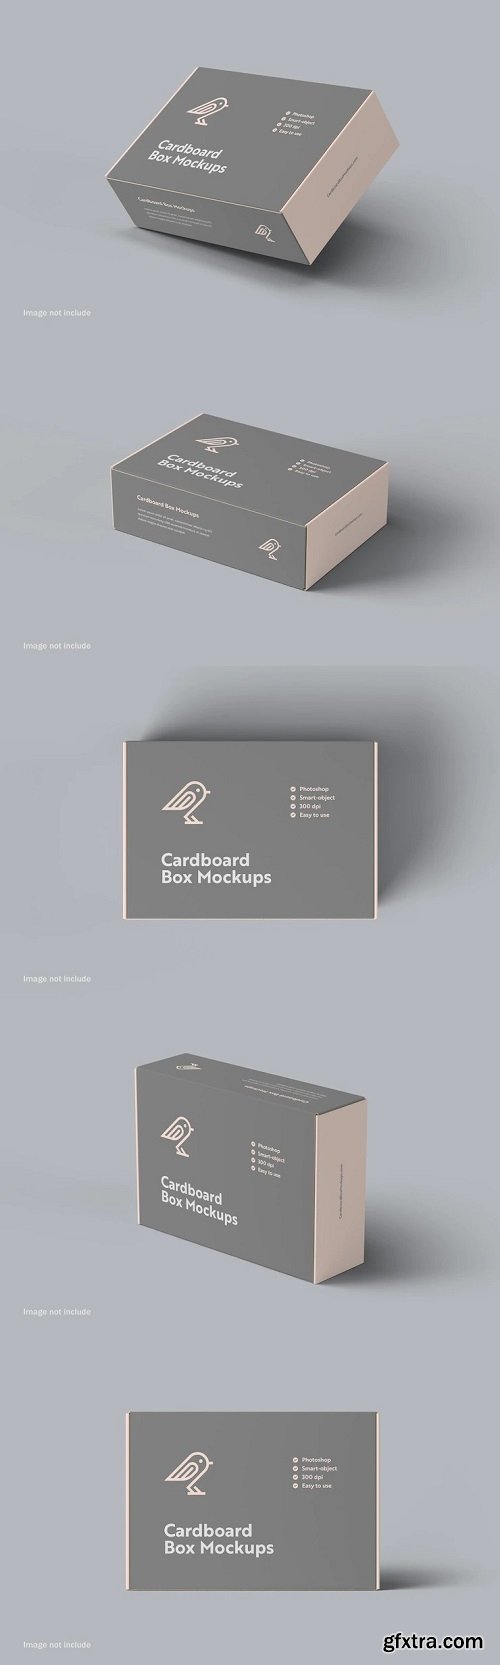 Cardboard box packaging mockup